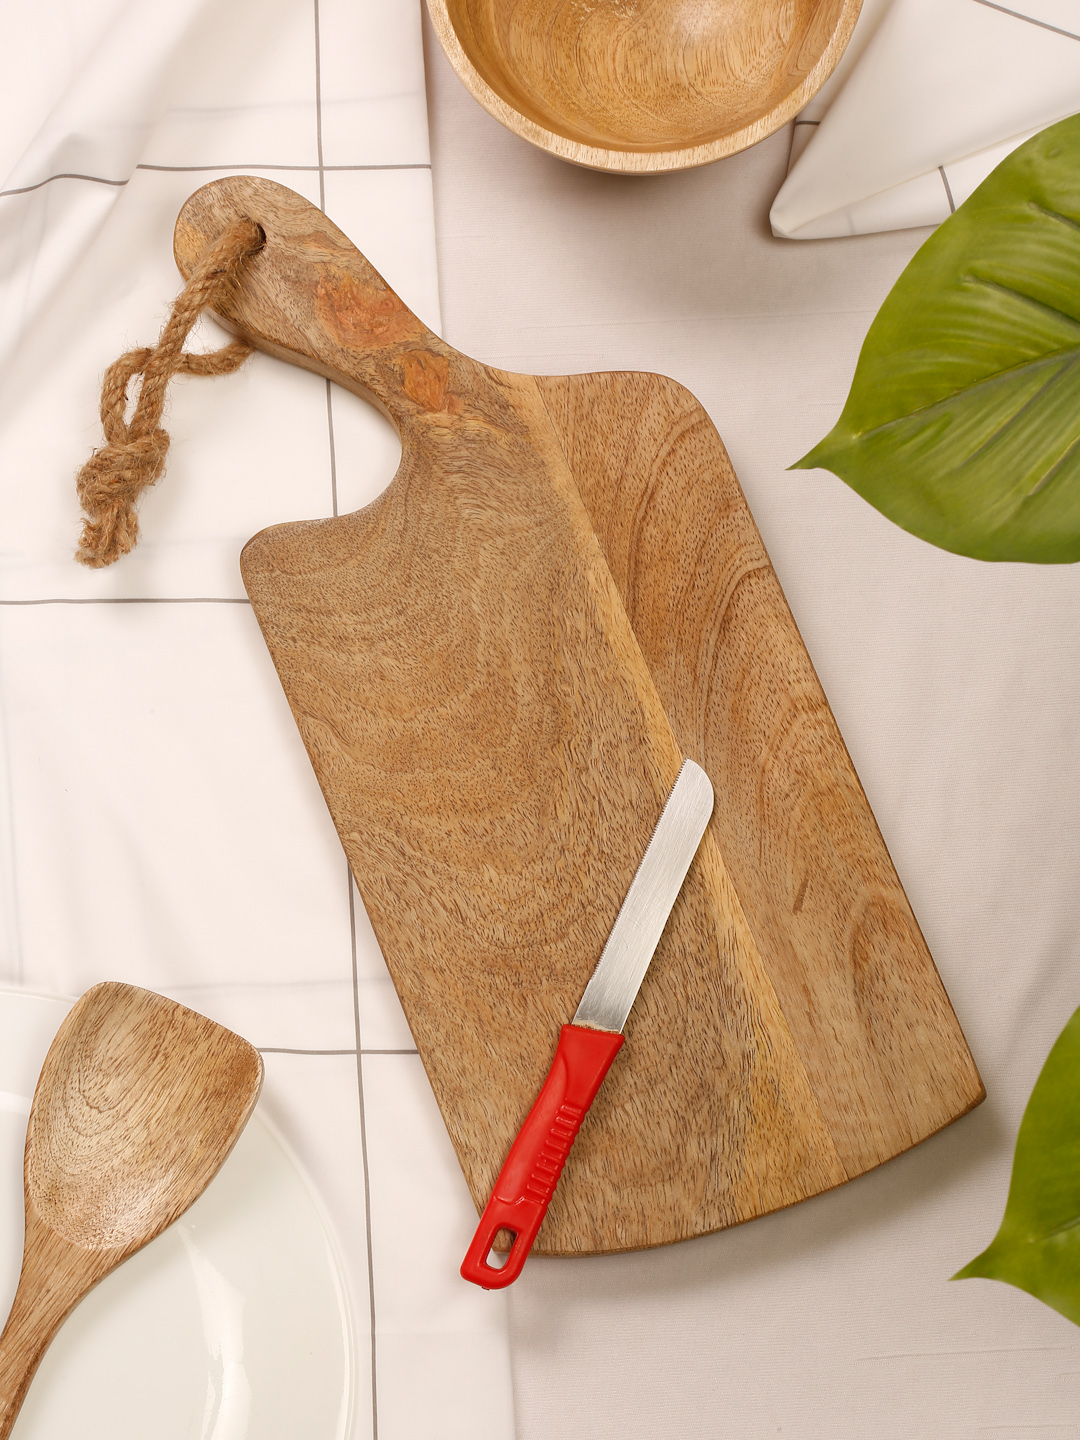 Natural wooden chopping board